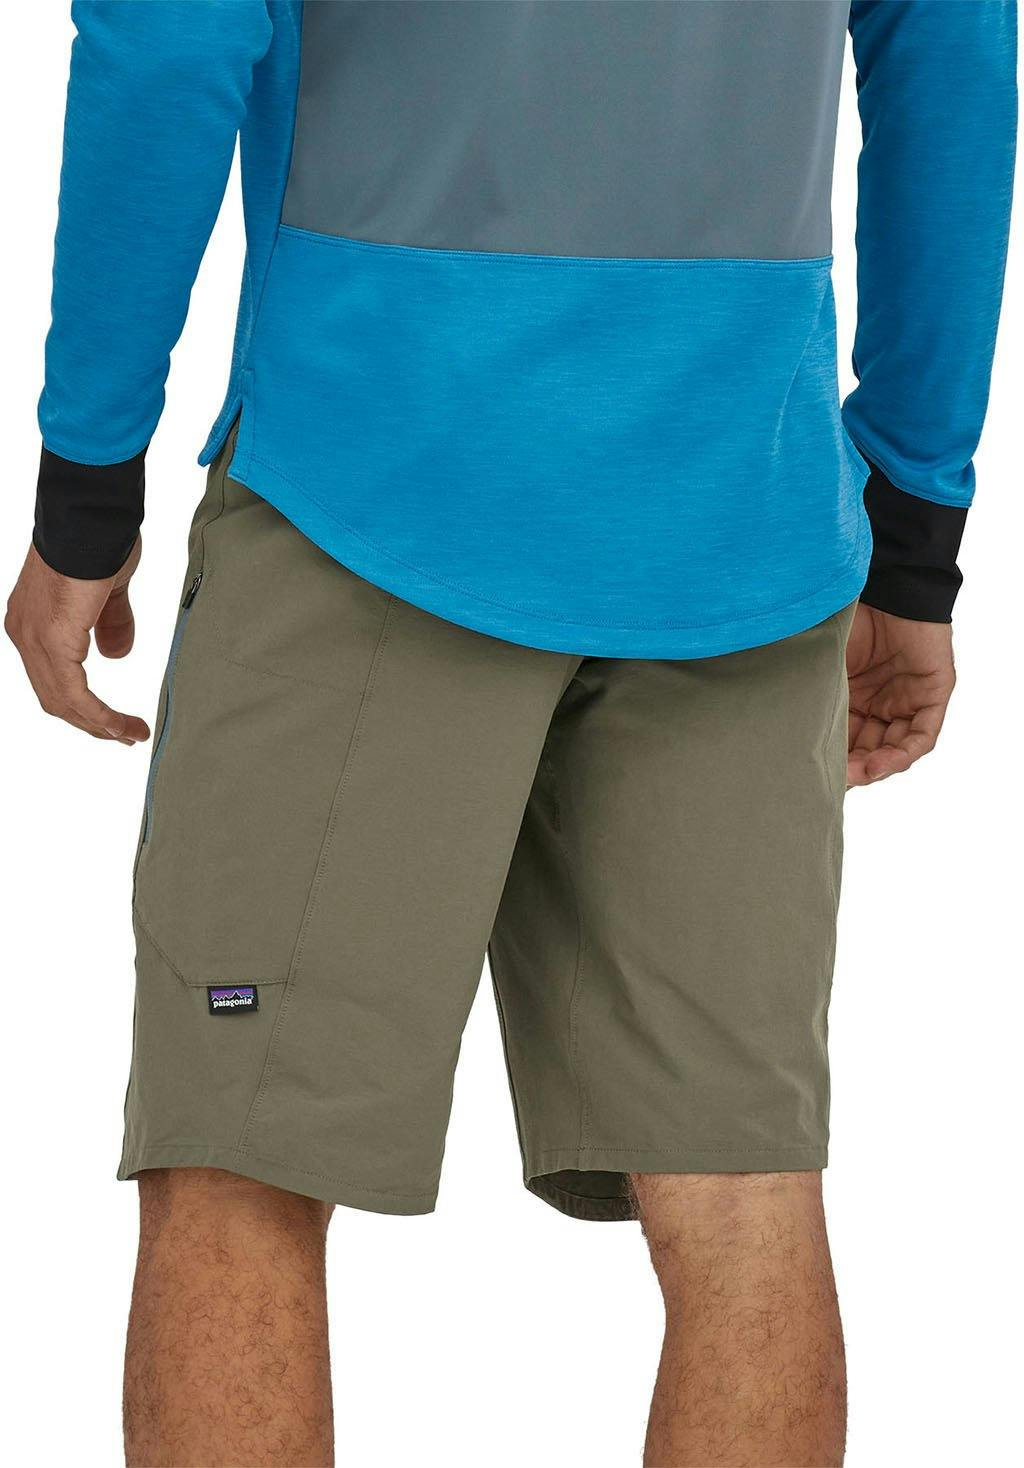 Product gallery image number 3 for product Landfarer Bike Shorts - Men's